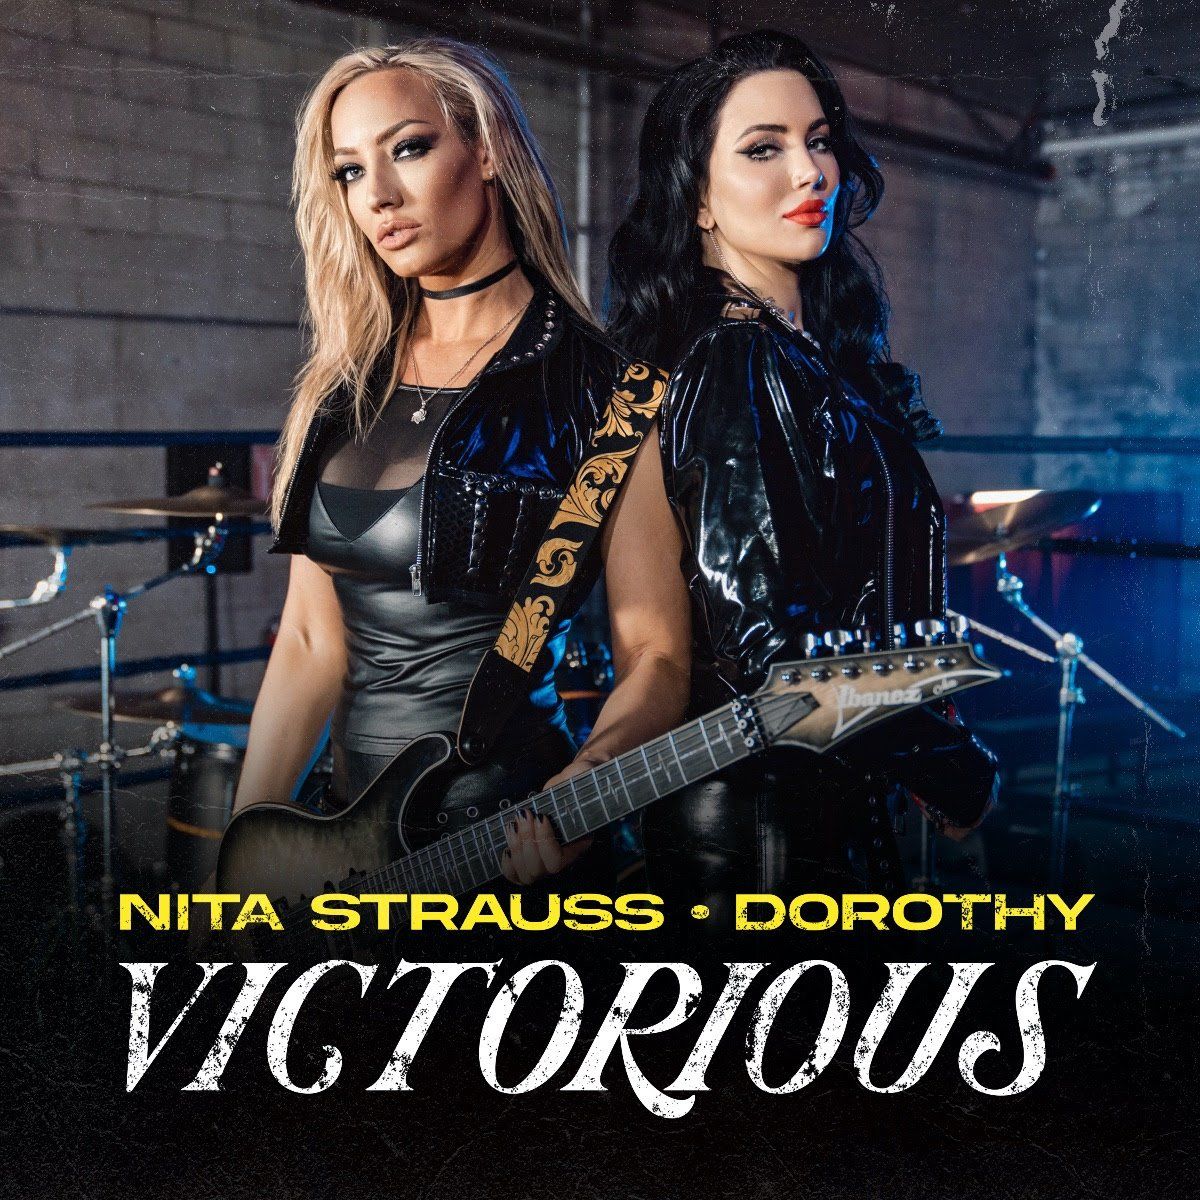 Nita Strauss Shares New Single and Album